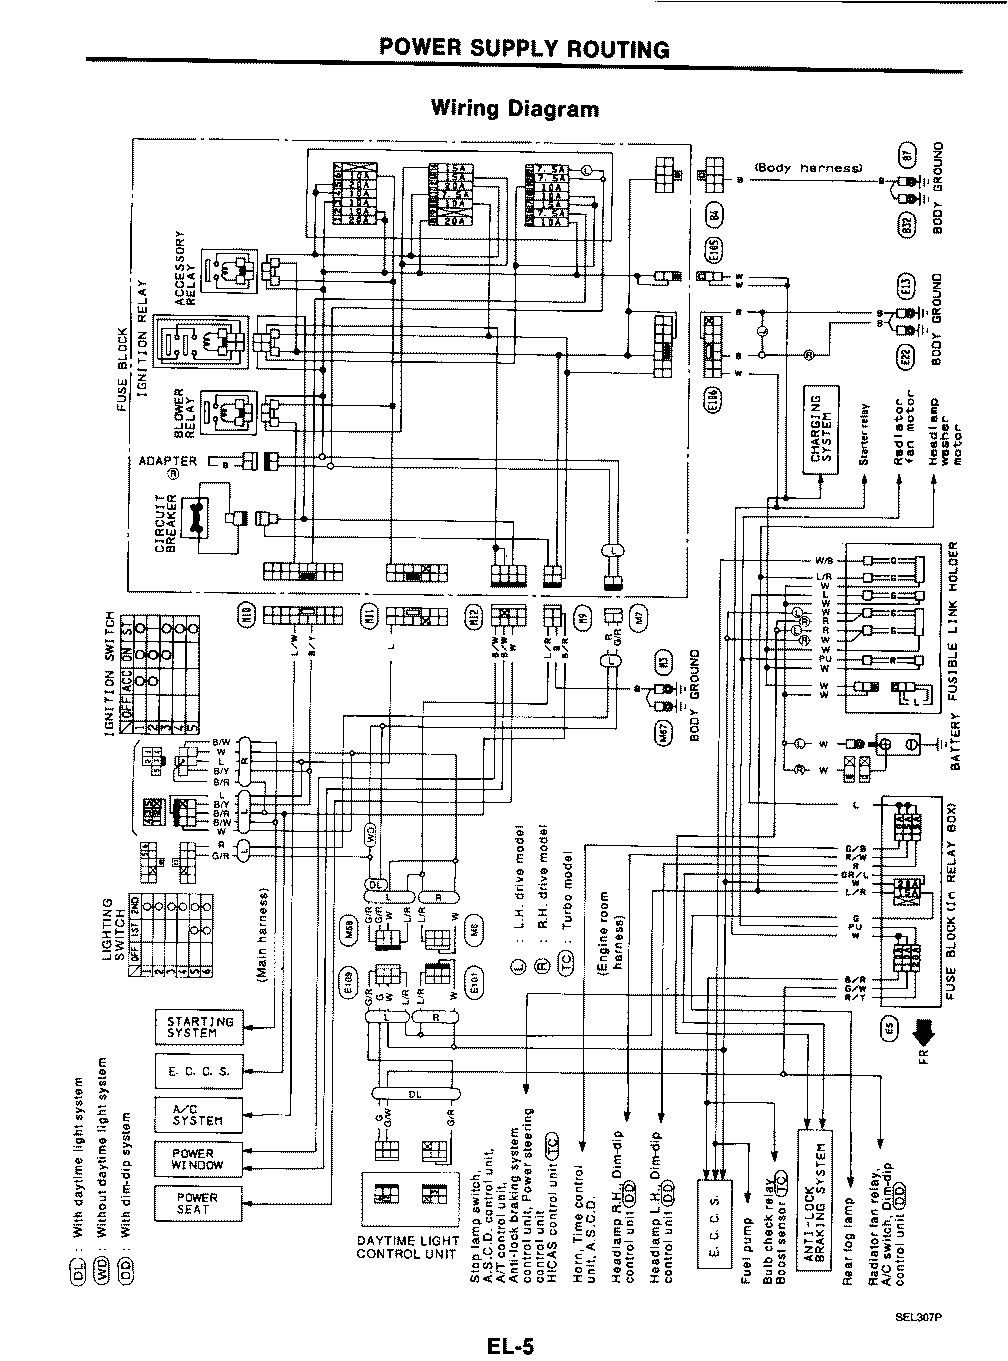 power supply wiring diagram nissan 300zx gif